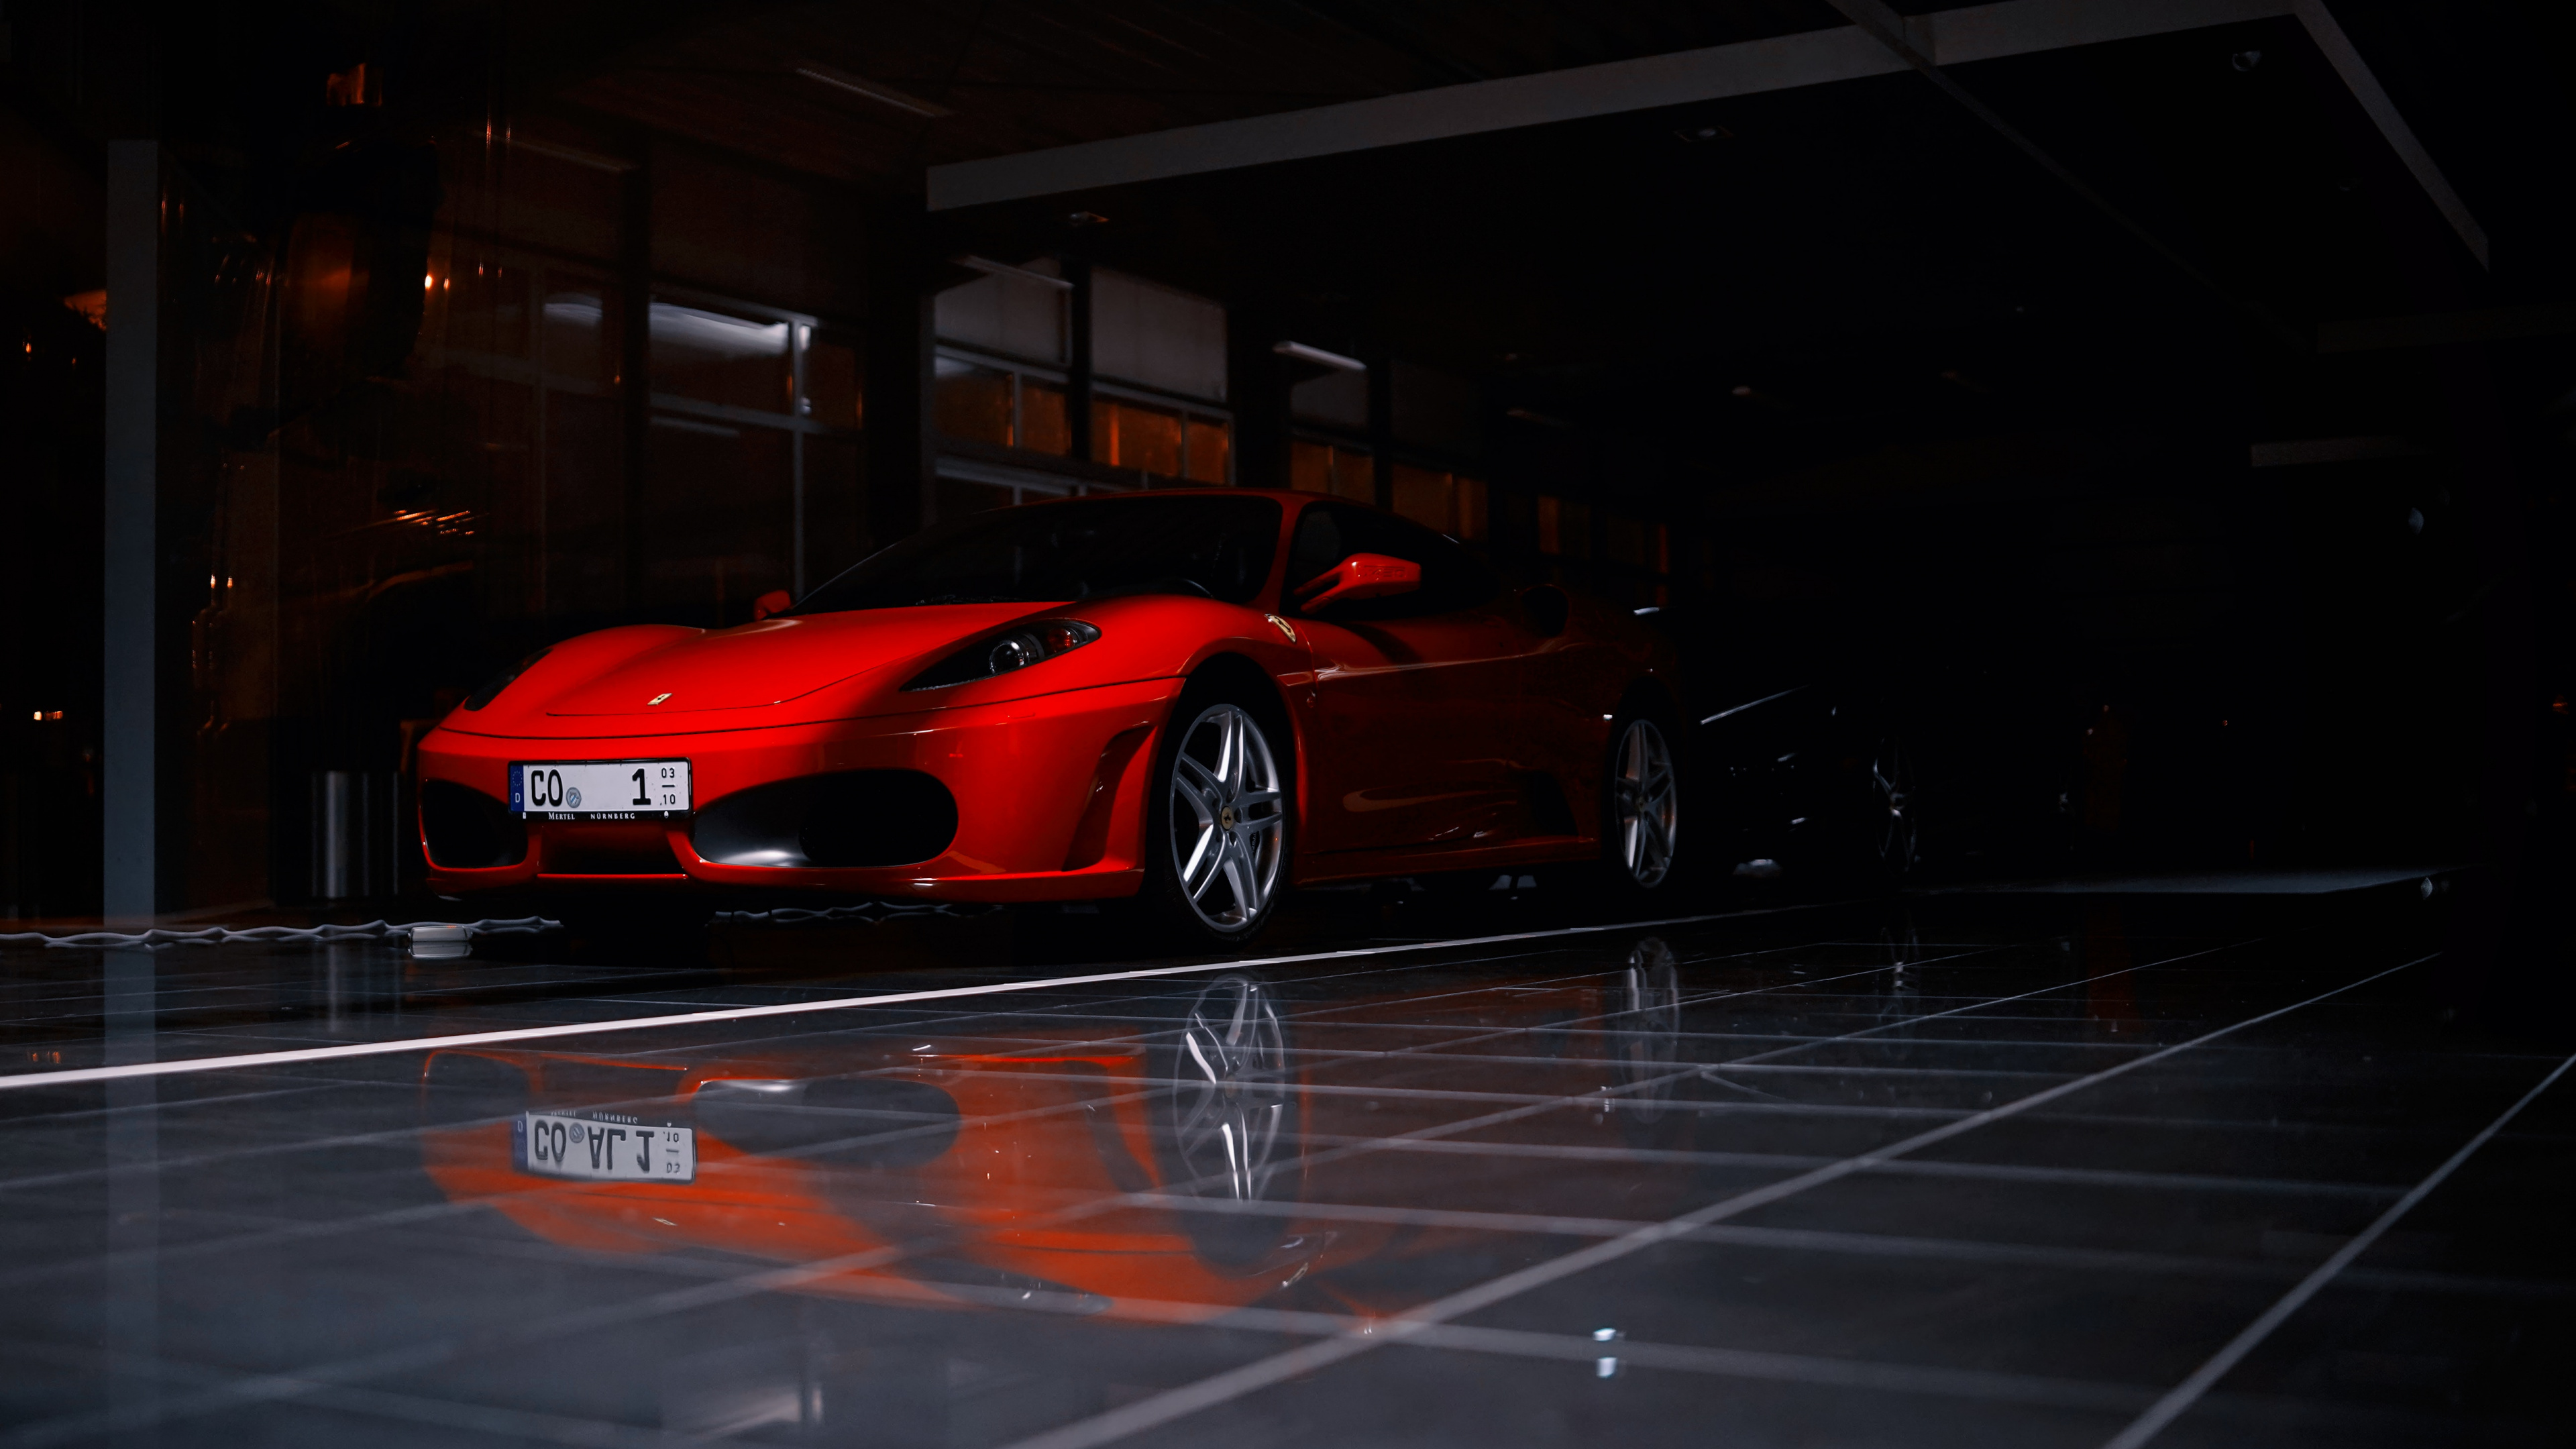 Red Ferrari 458 Italia Parked on Parking Lot. Wallpaper in 3840x2160 Resolution